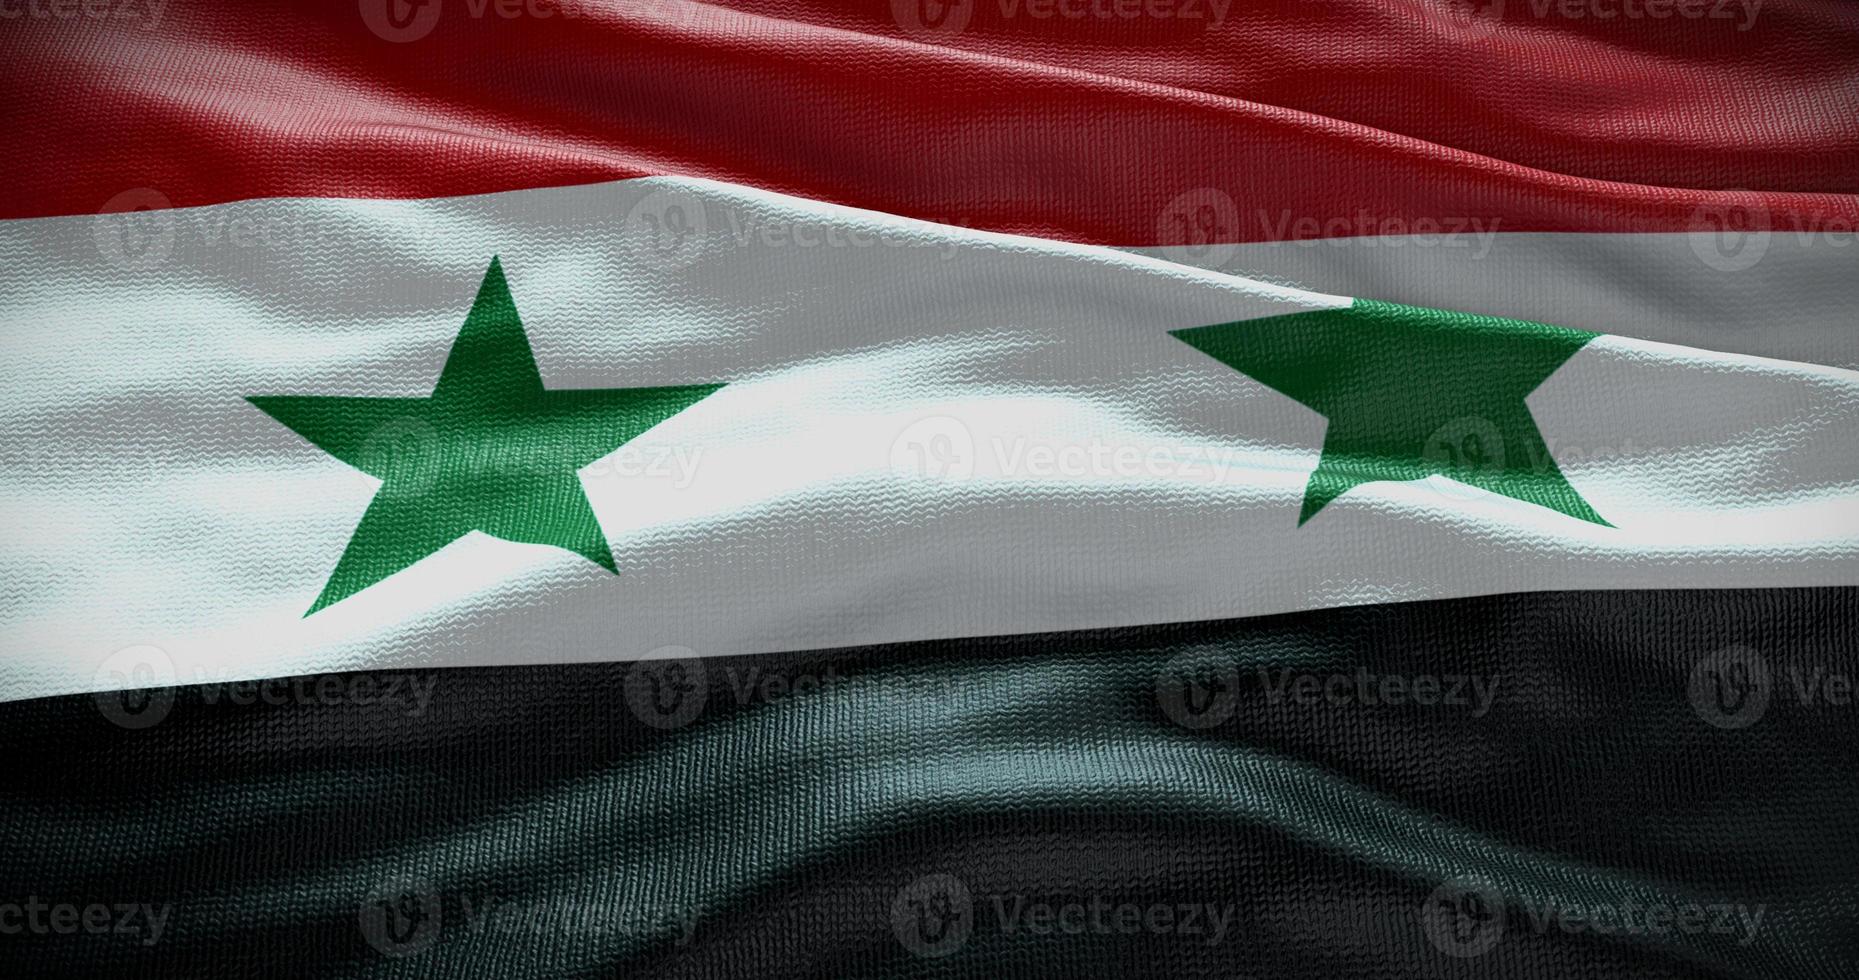 Syrië nationaal vlag achtergrond illustratie. symbool van land foto